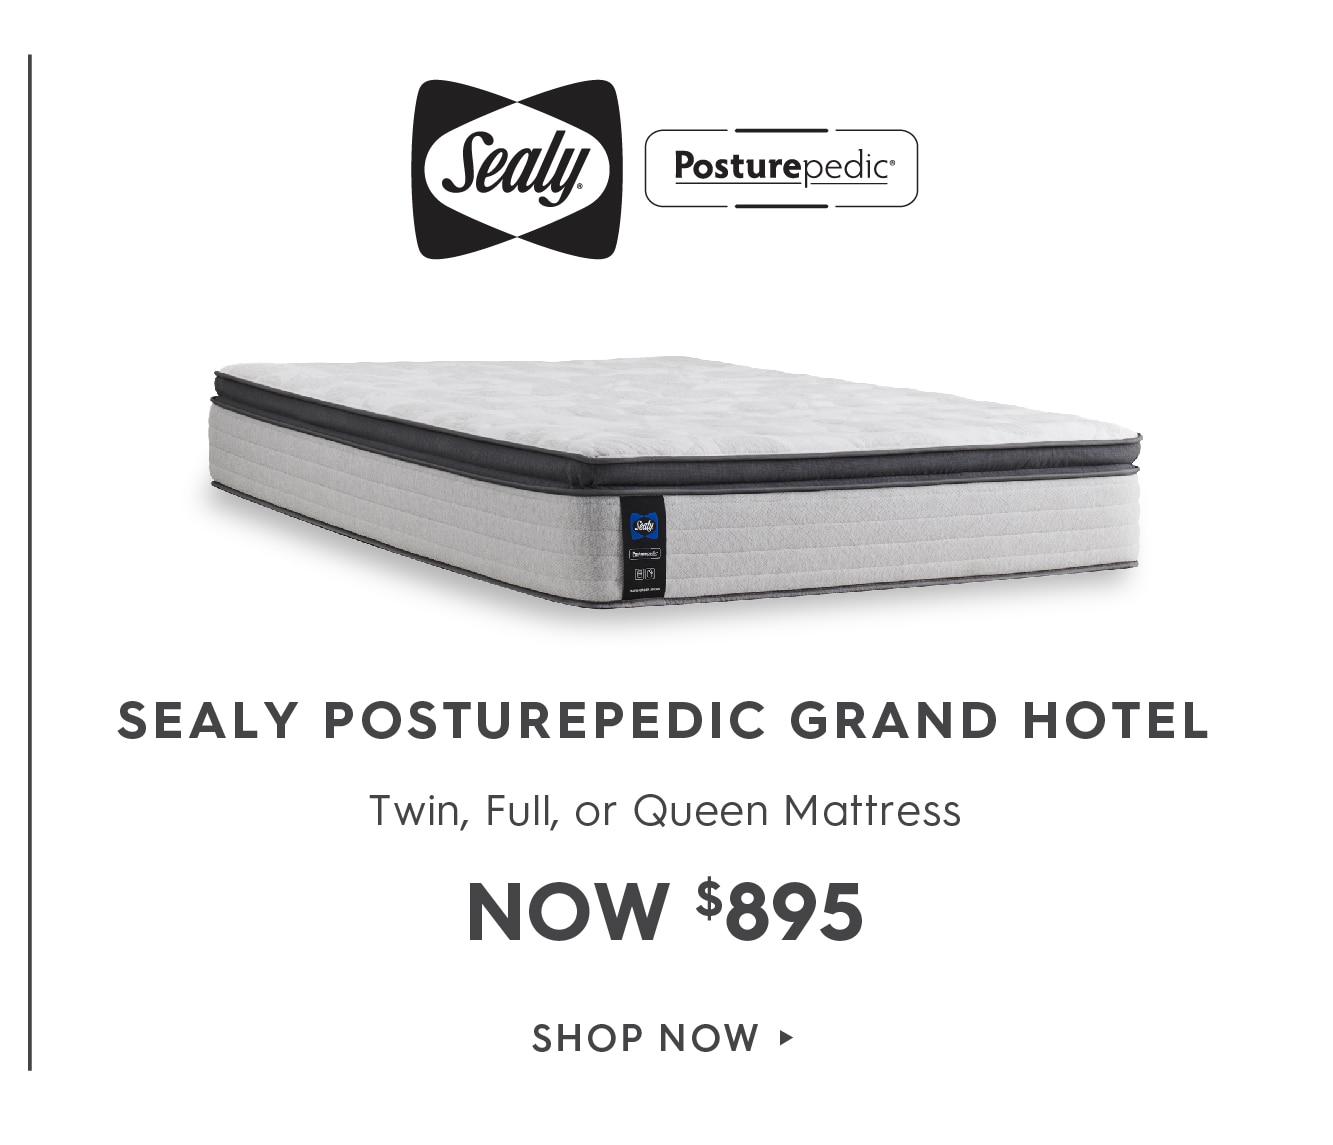 Shop the Sealy Posturepedic Grand Hotel Deals.